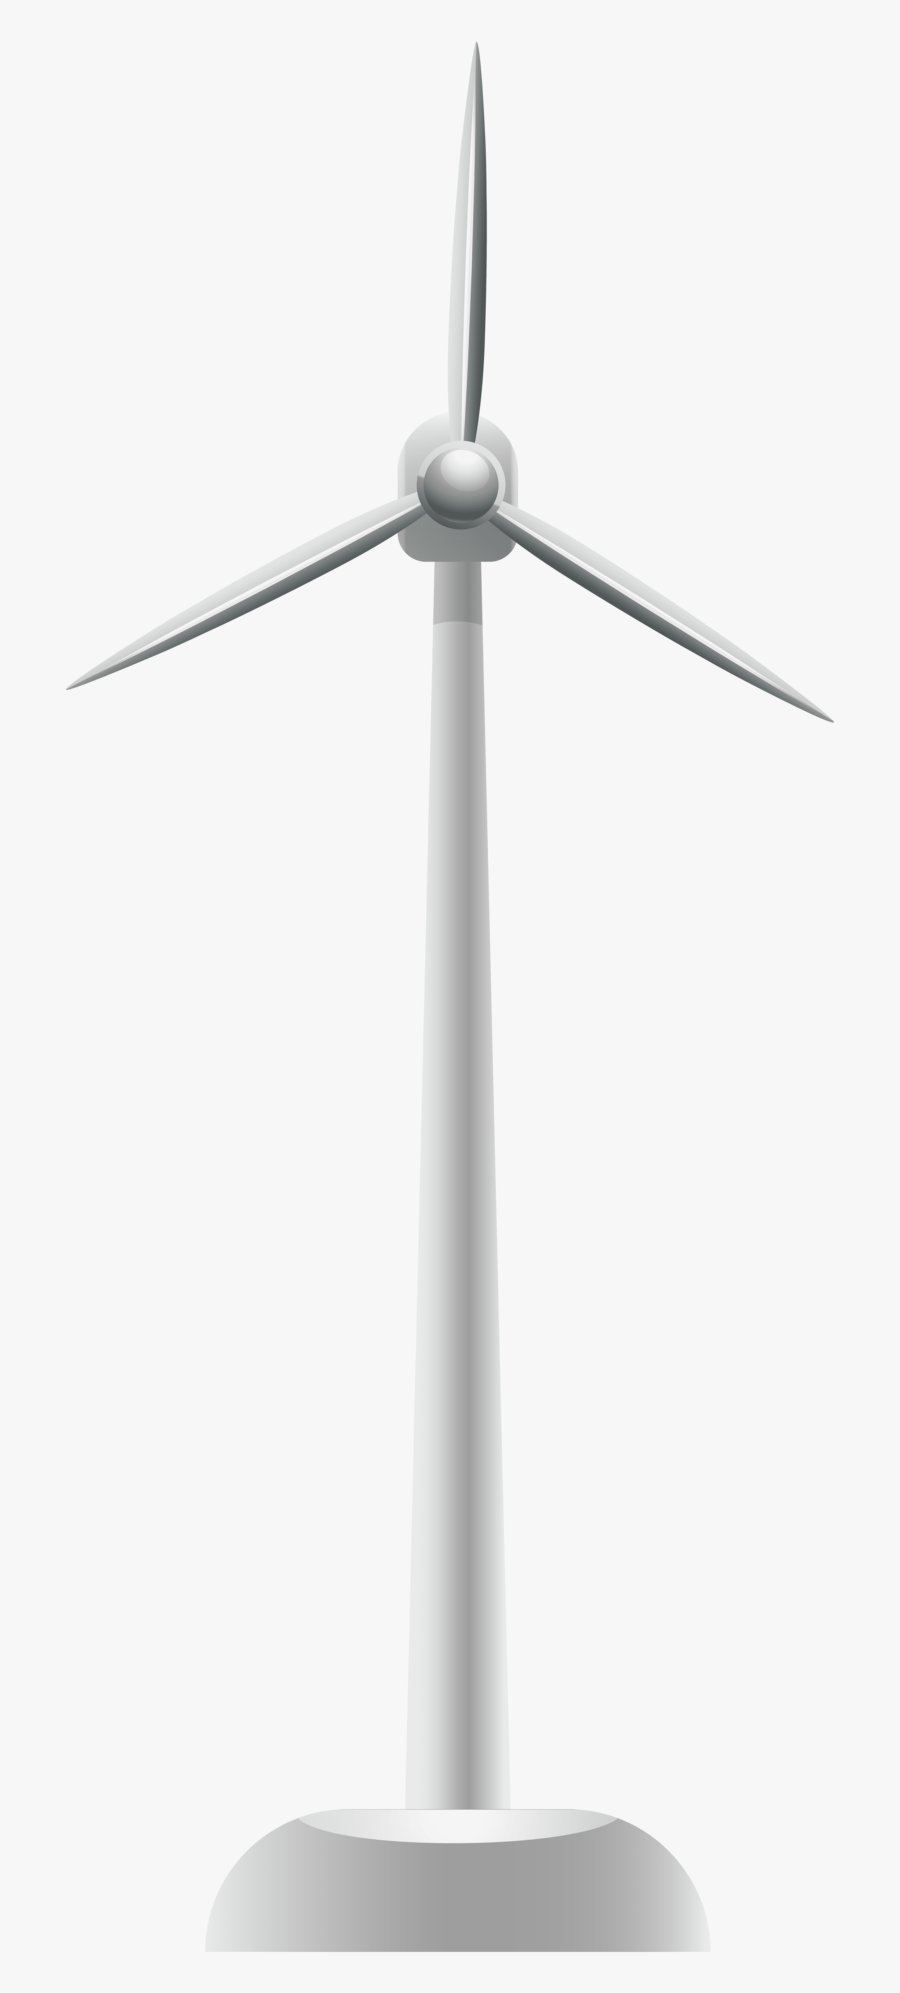 Wind Turbine Png, Transparent Clipart